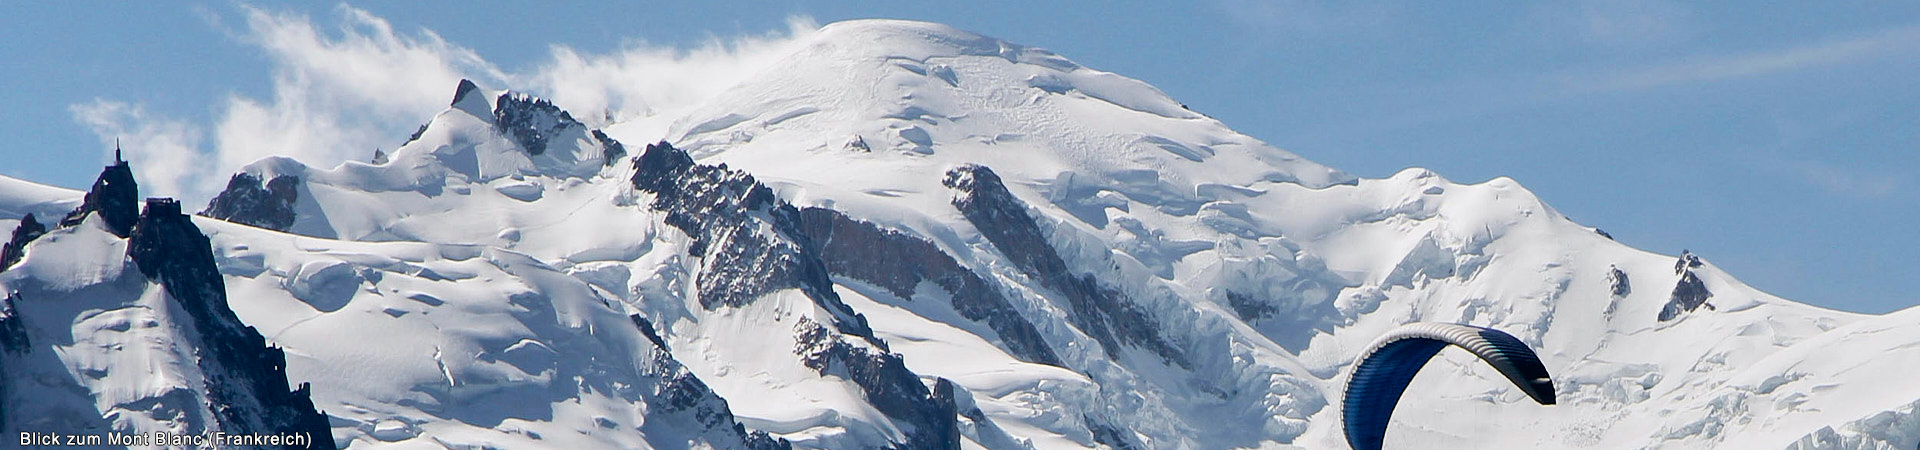 Mont_Blanc_img_1332a_1.jpg